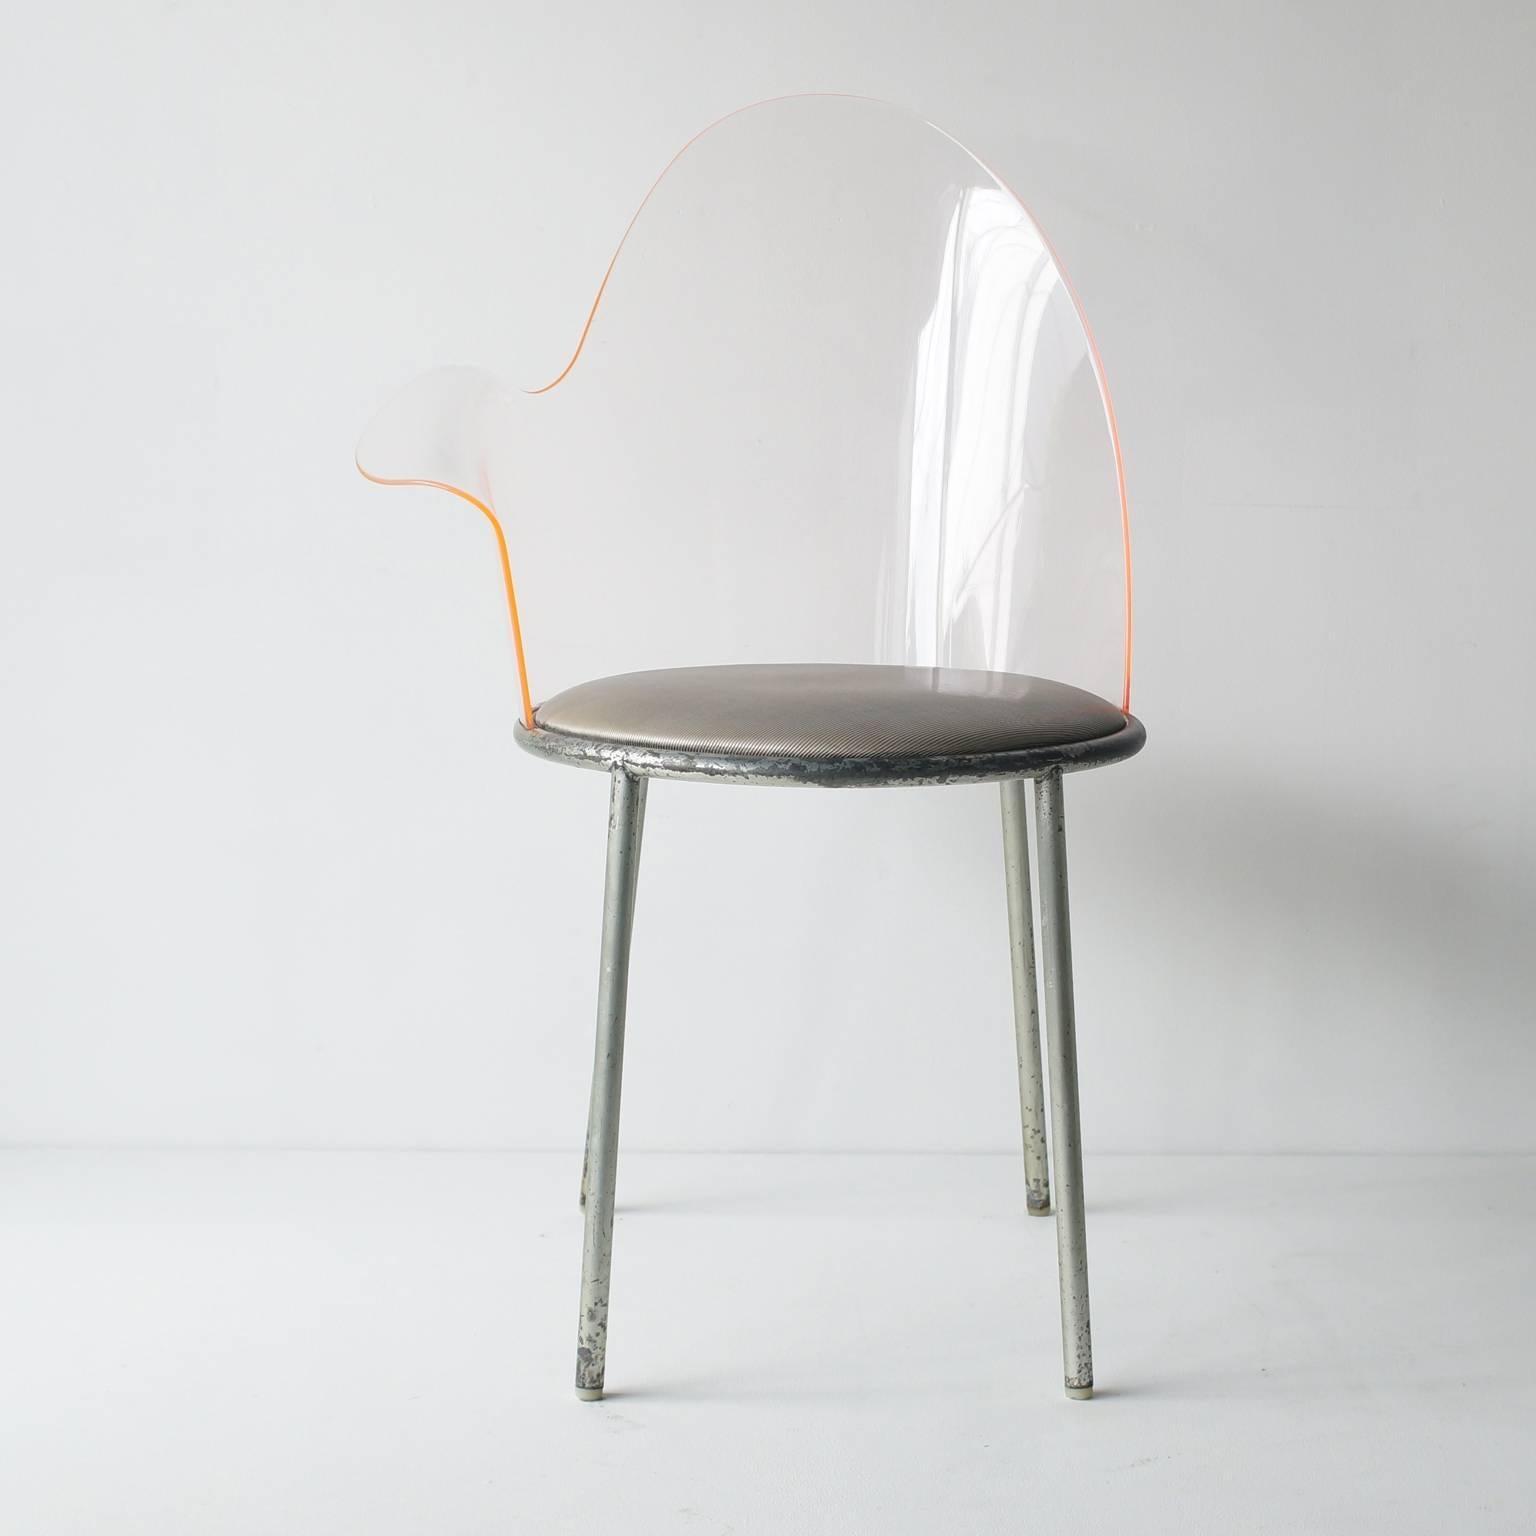 Japanese Acrylic Back Chair by Shiro Kuramata